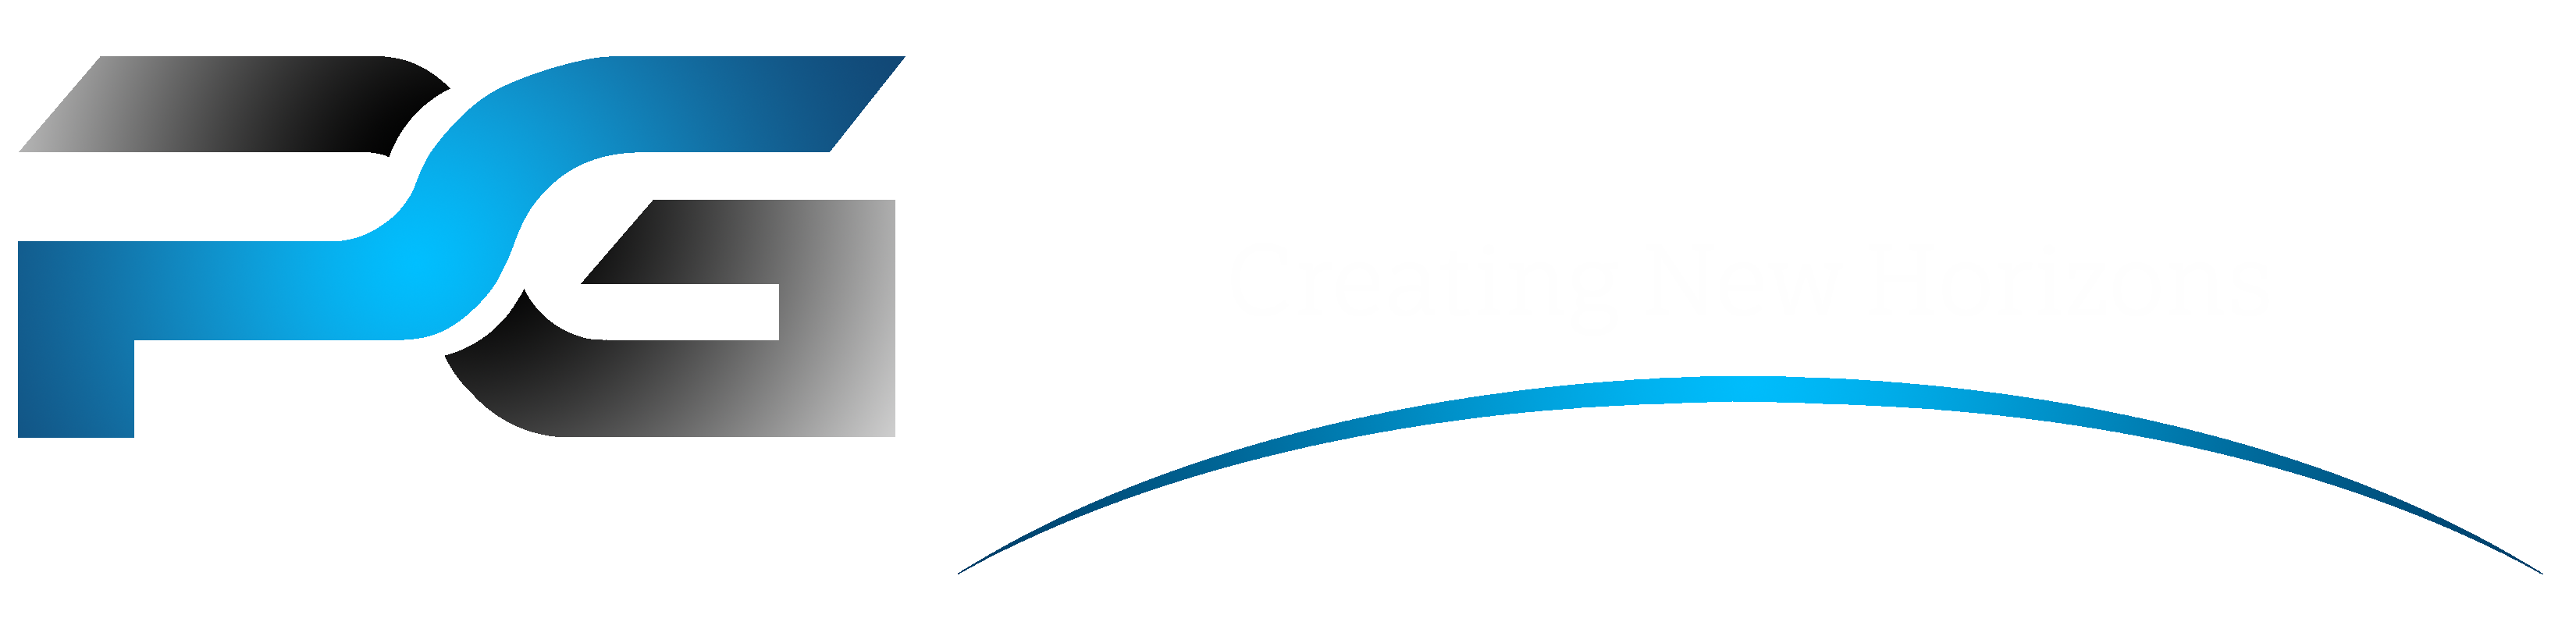 Prodigal Group Logo White with glow no bgd